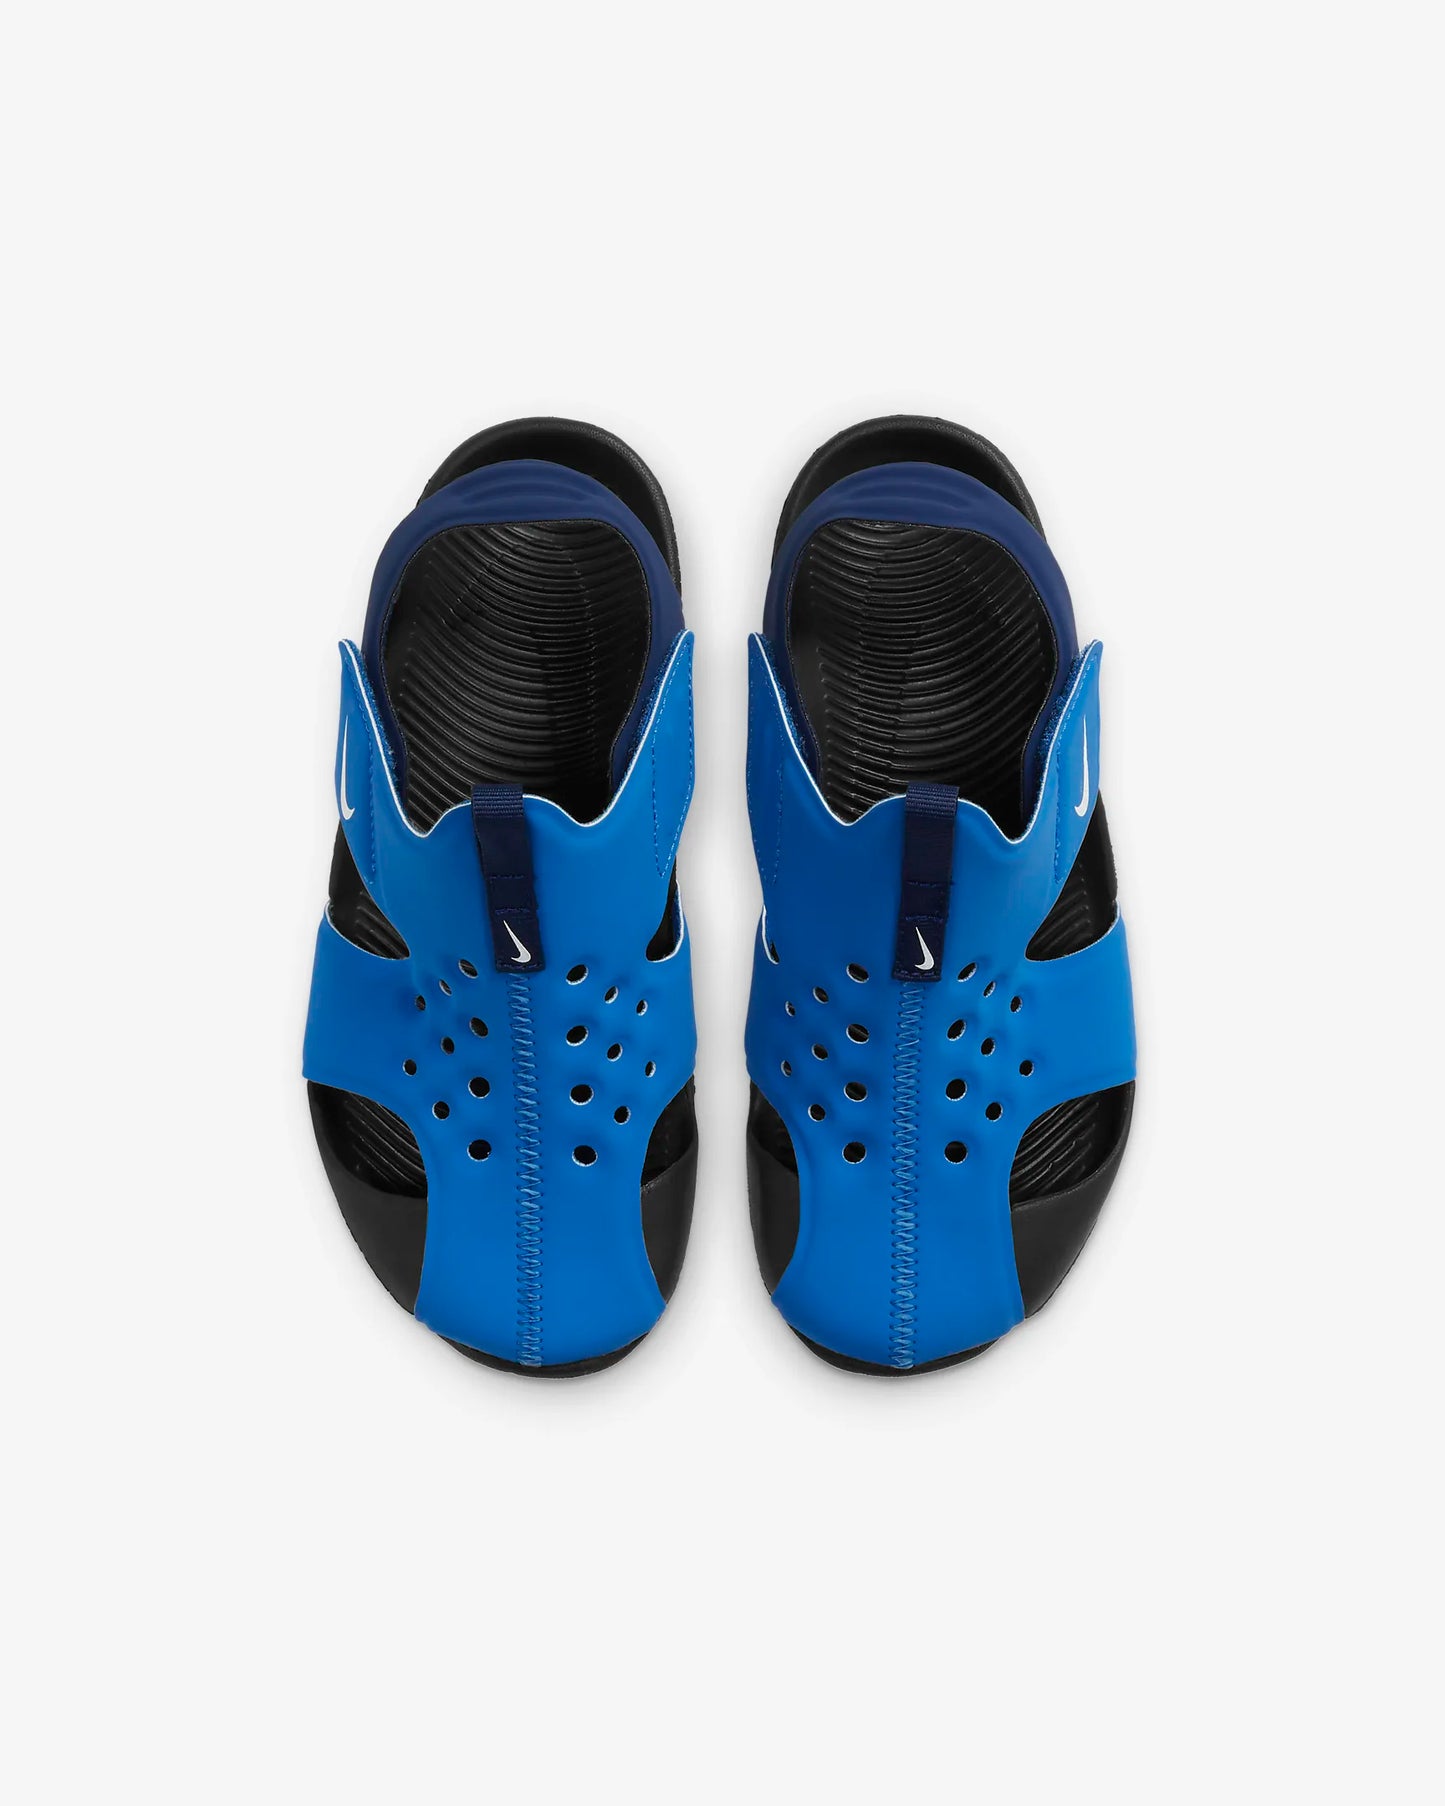 - Nike Kids Sunray Protect 2 BLUE - (943826-403) - SUN - R1L9